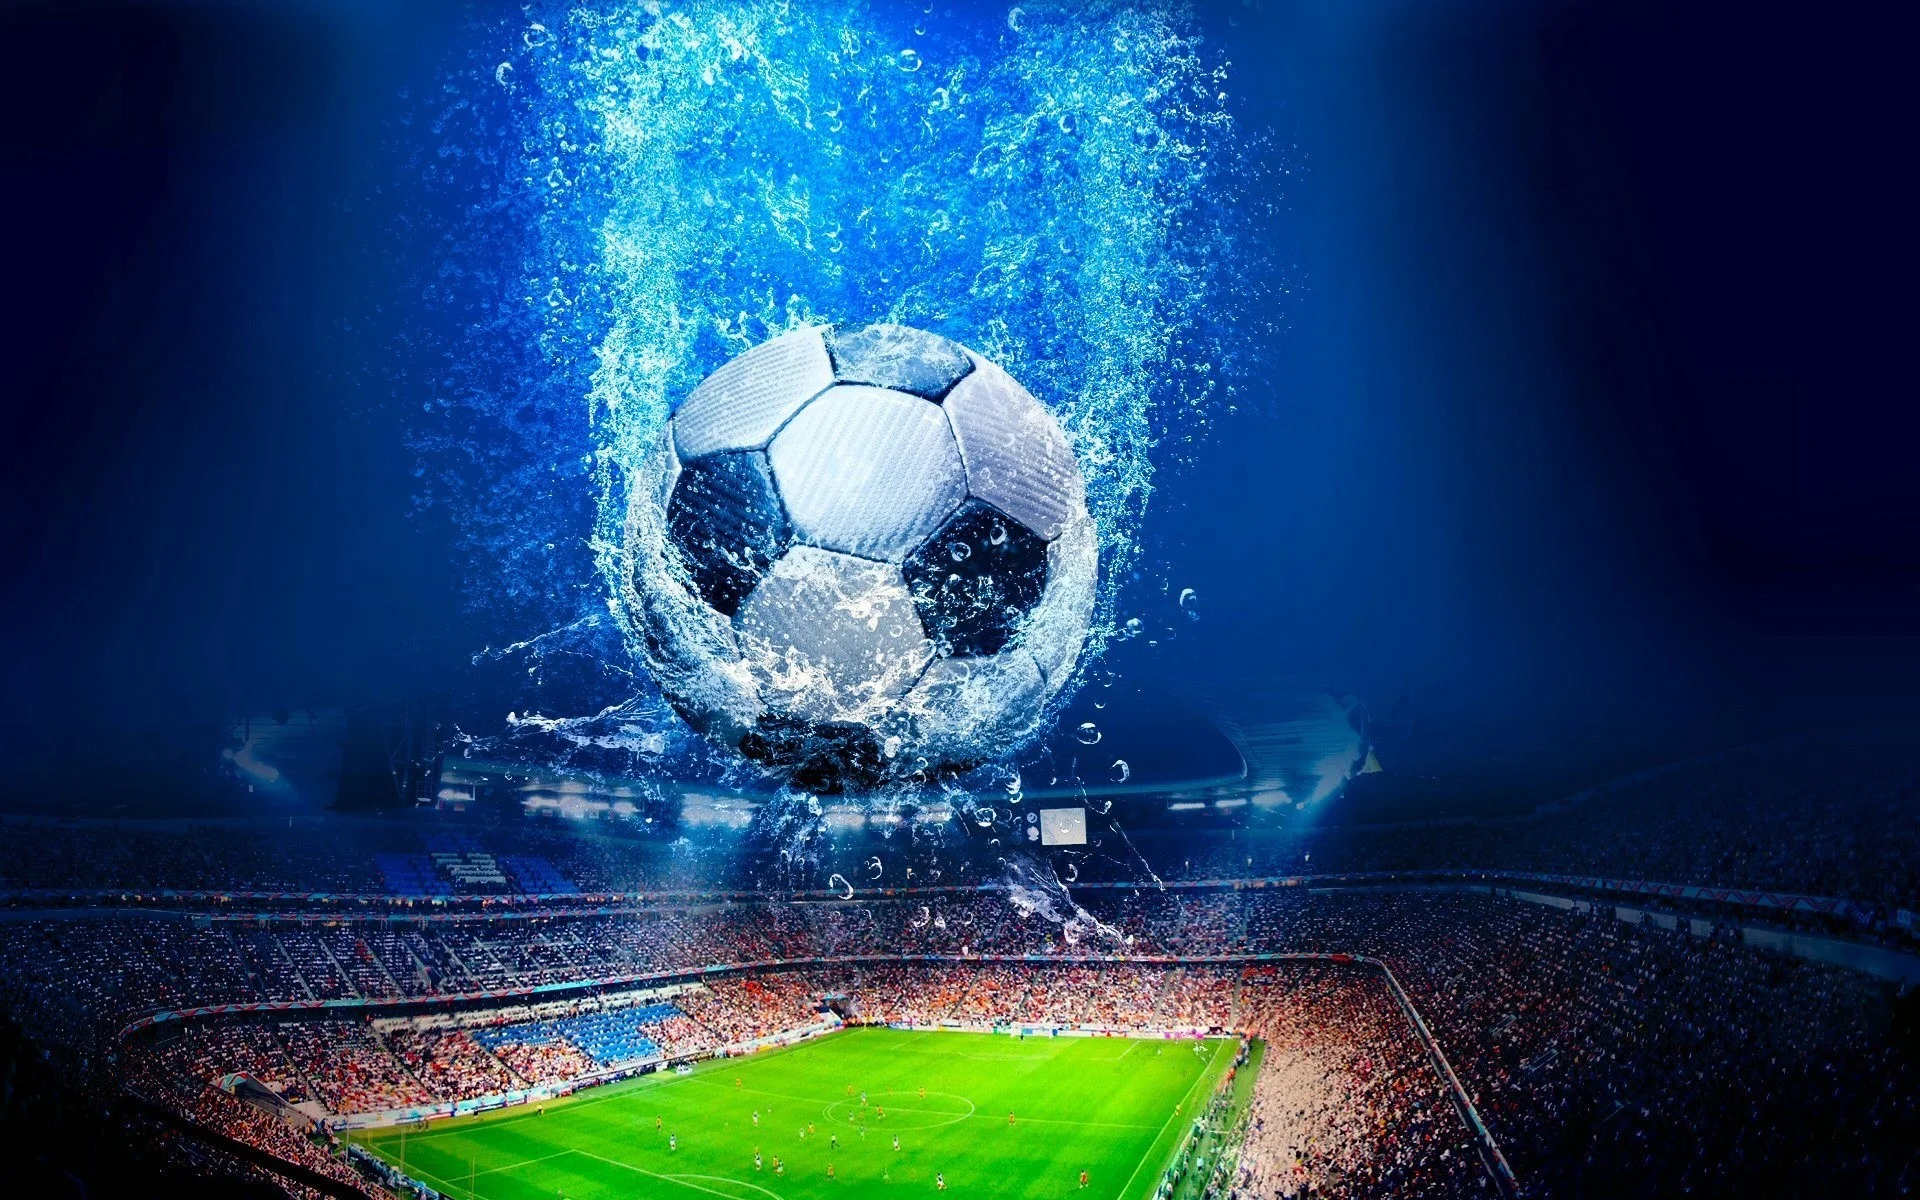 Fantasy Football HD Wallpapers 9 #FantasyFootballHDWallpapers  #FantasyFootball #fantasy #football #soccer #